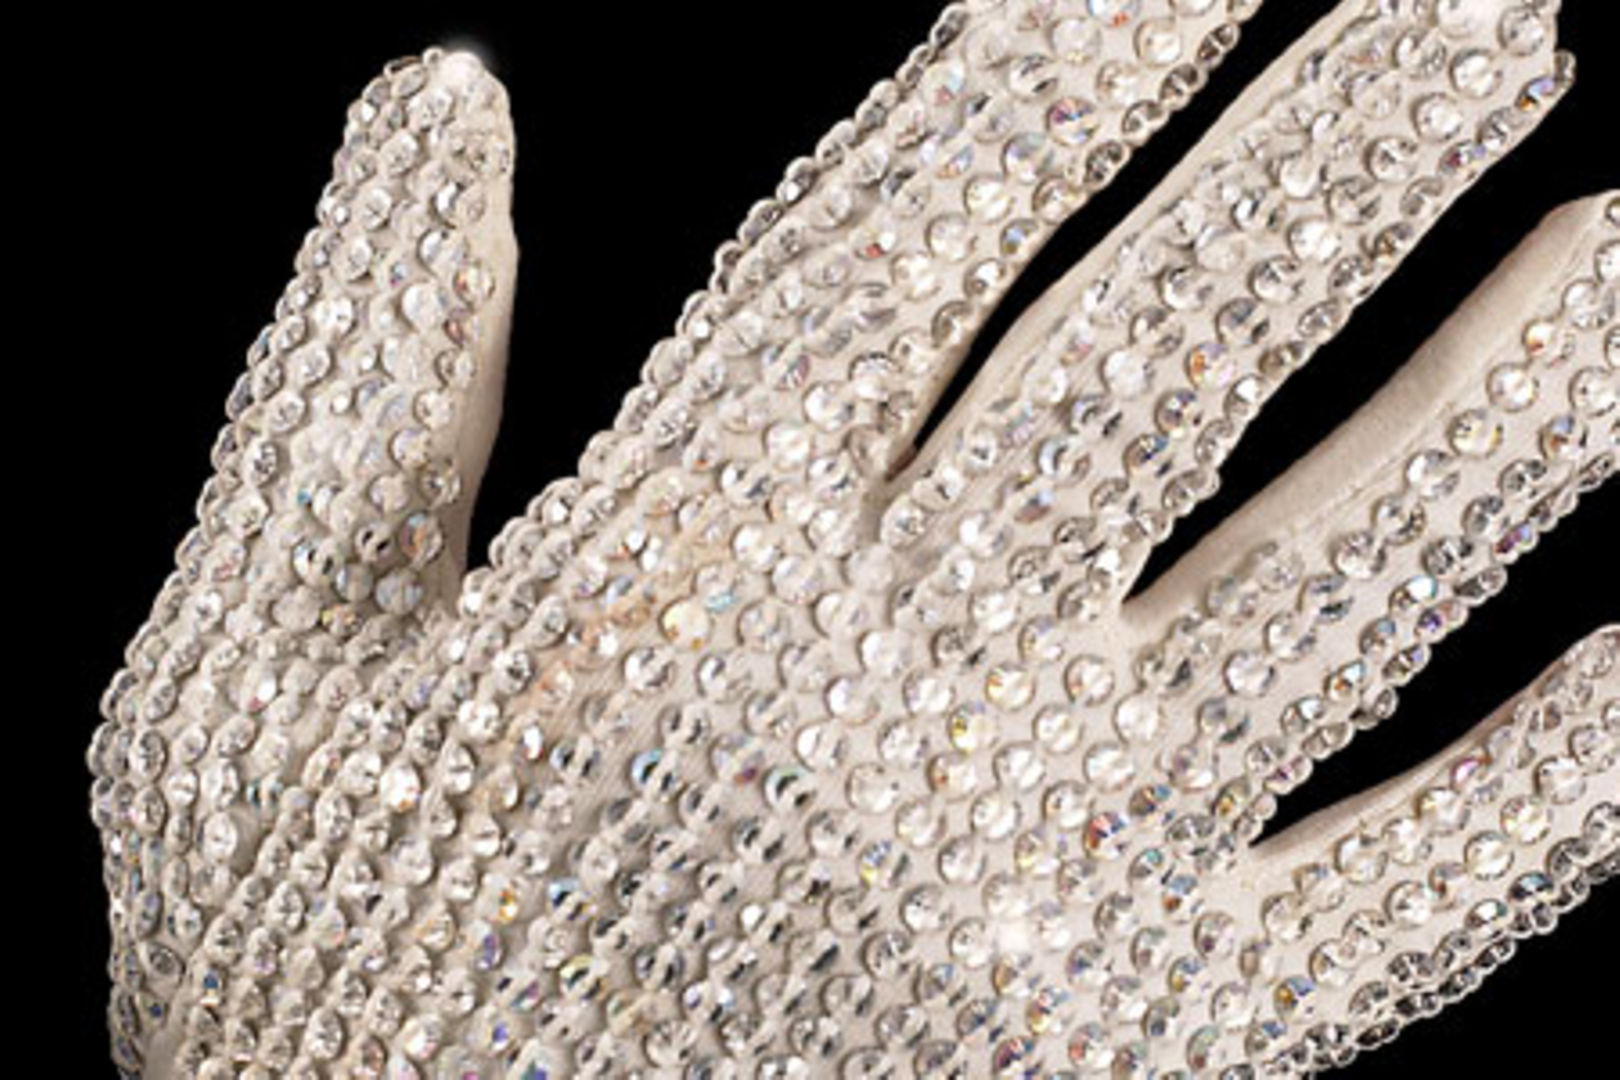 Michael Jackson glove sells for $49,000